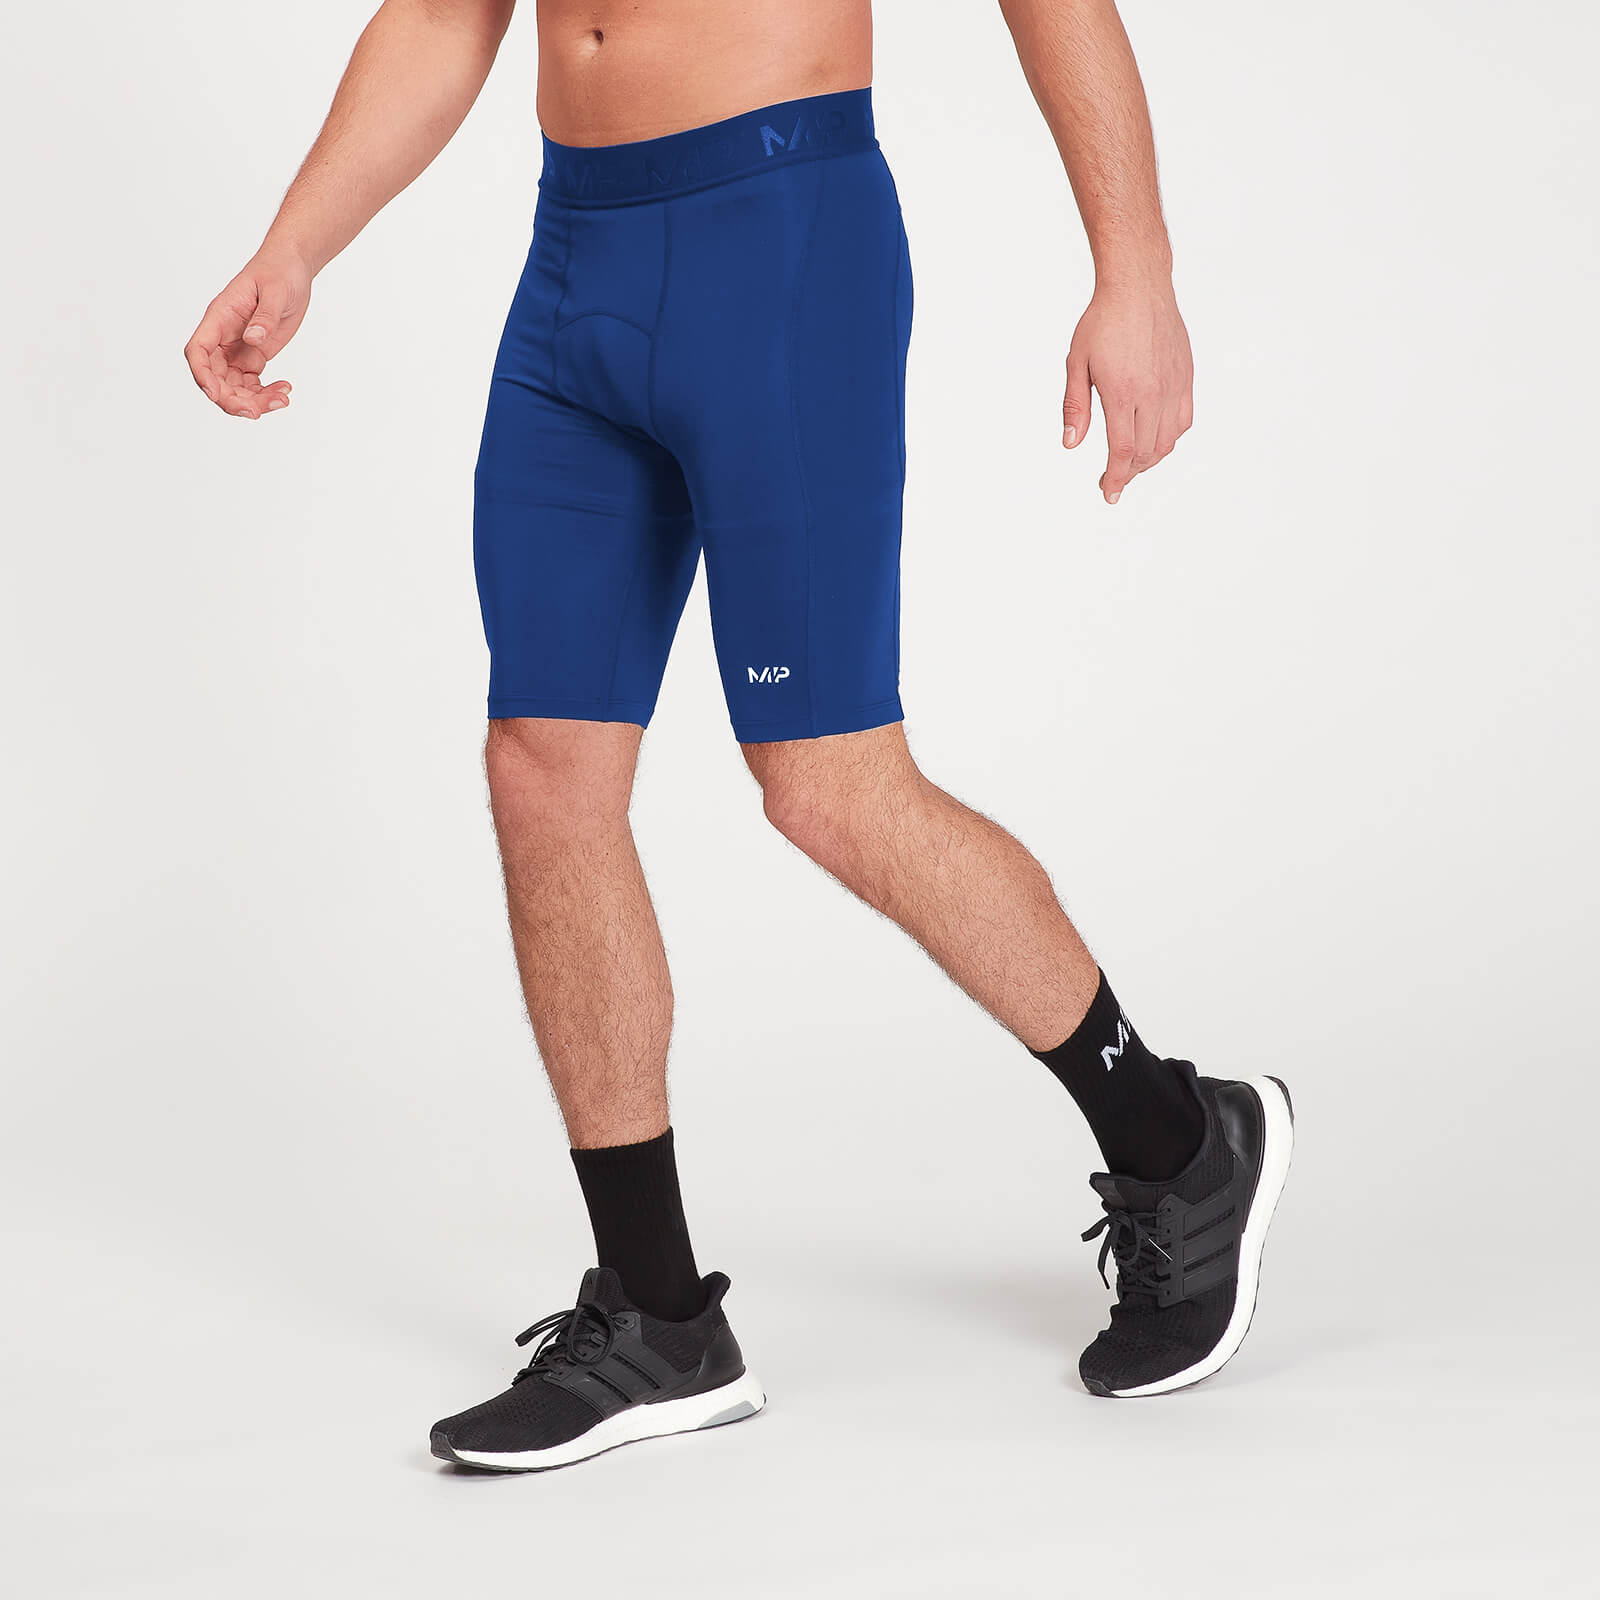 Pantalón corto interior de deporte de entrenamiento para hombre de MP - Azul intenso - M